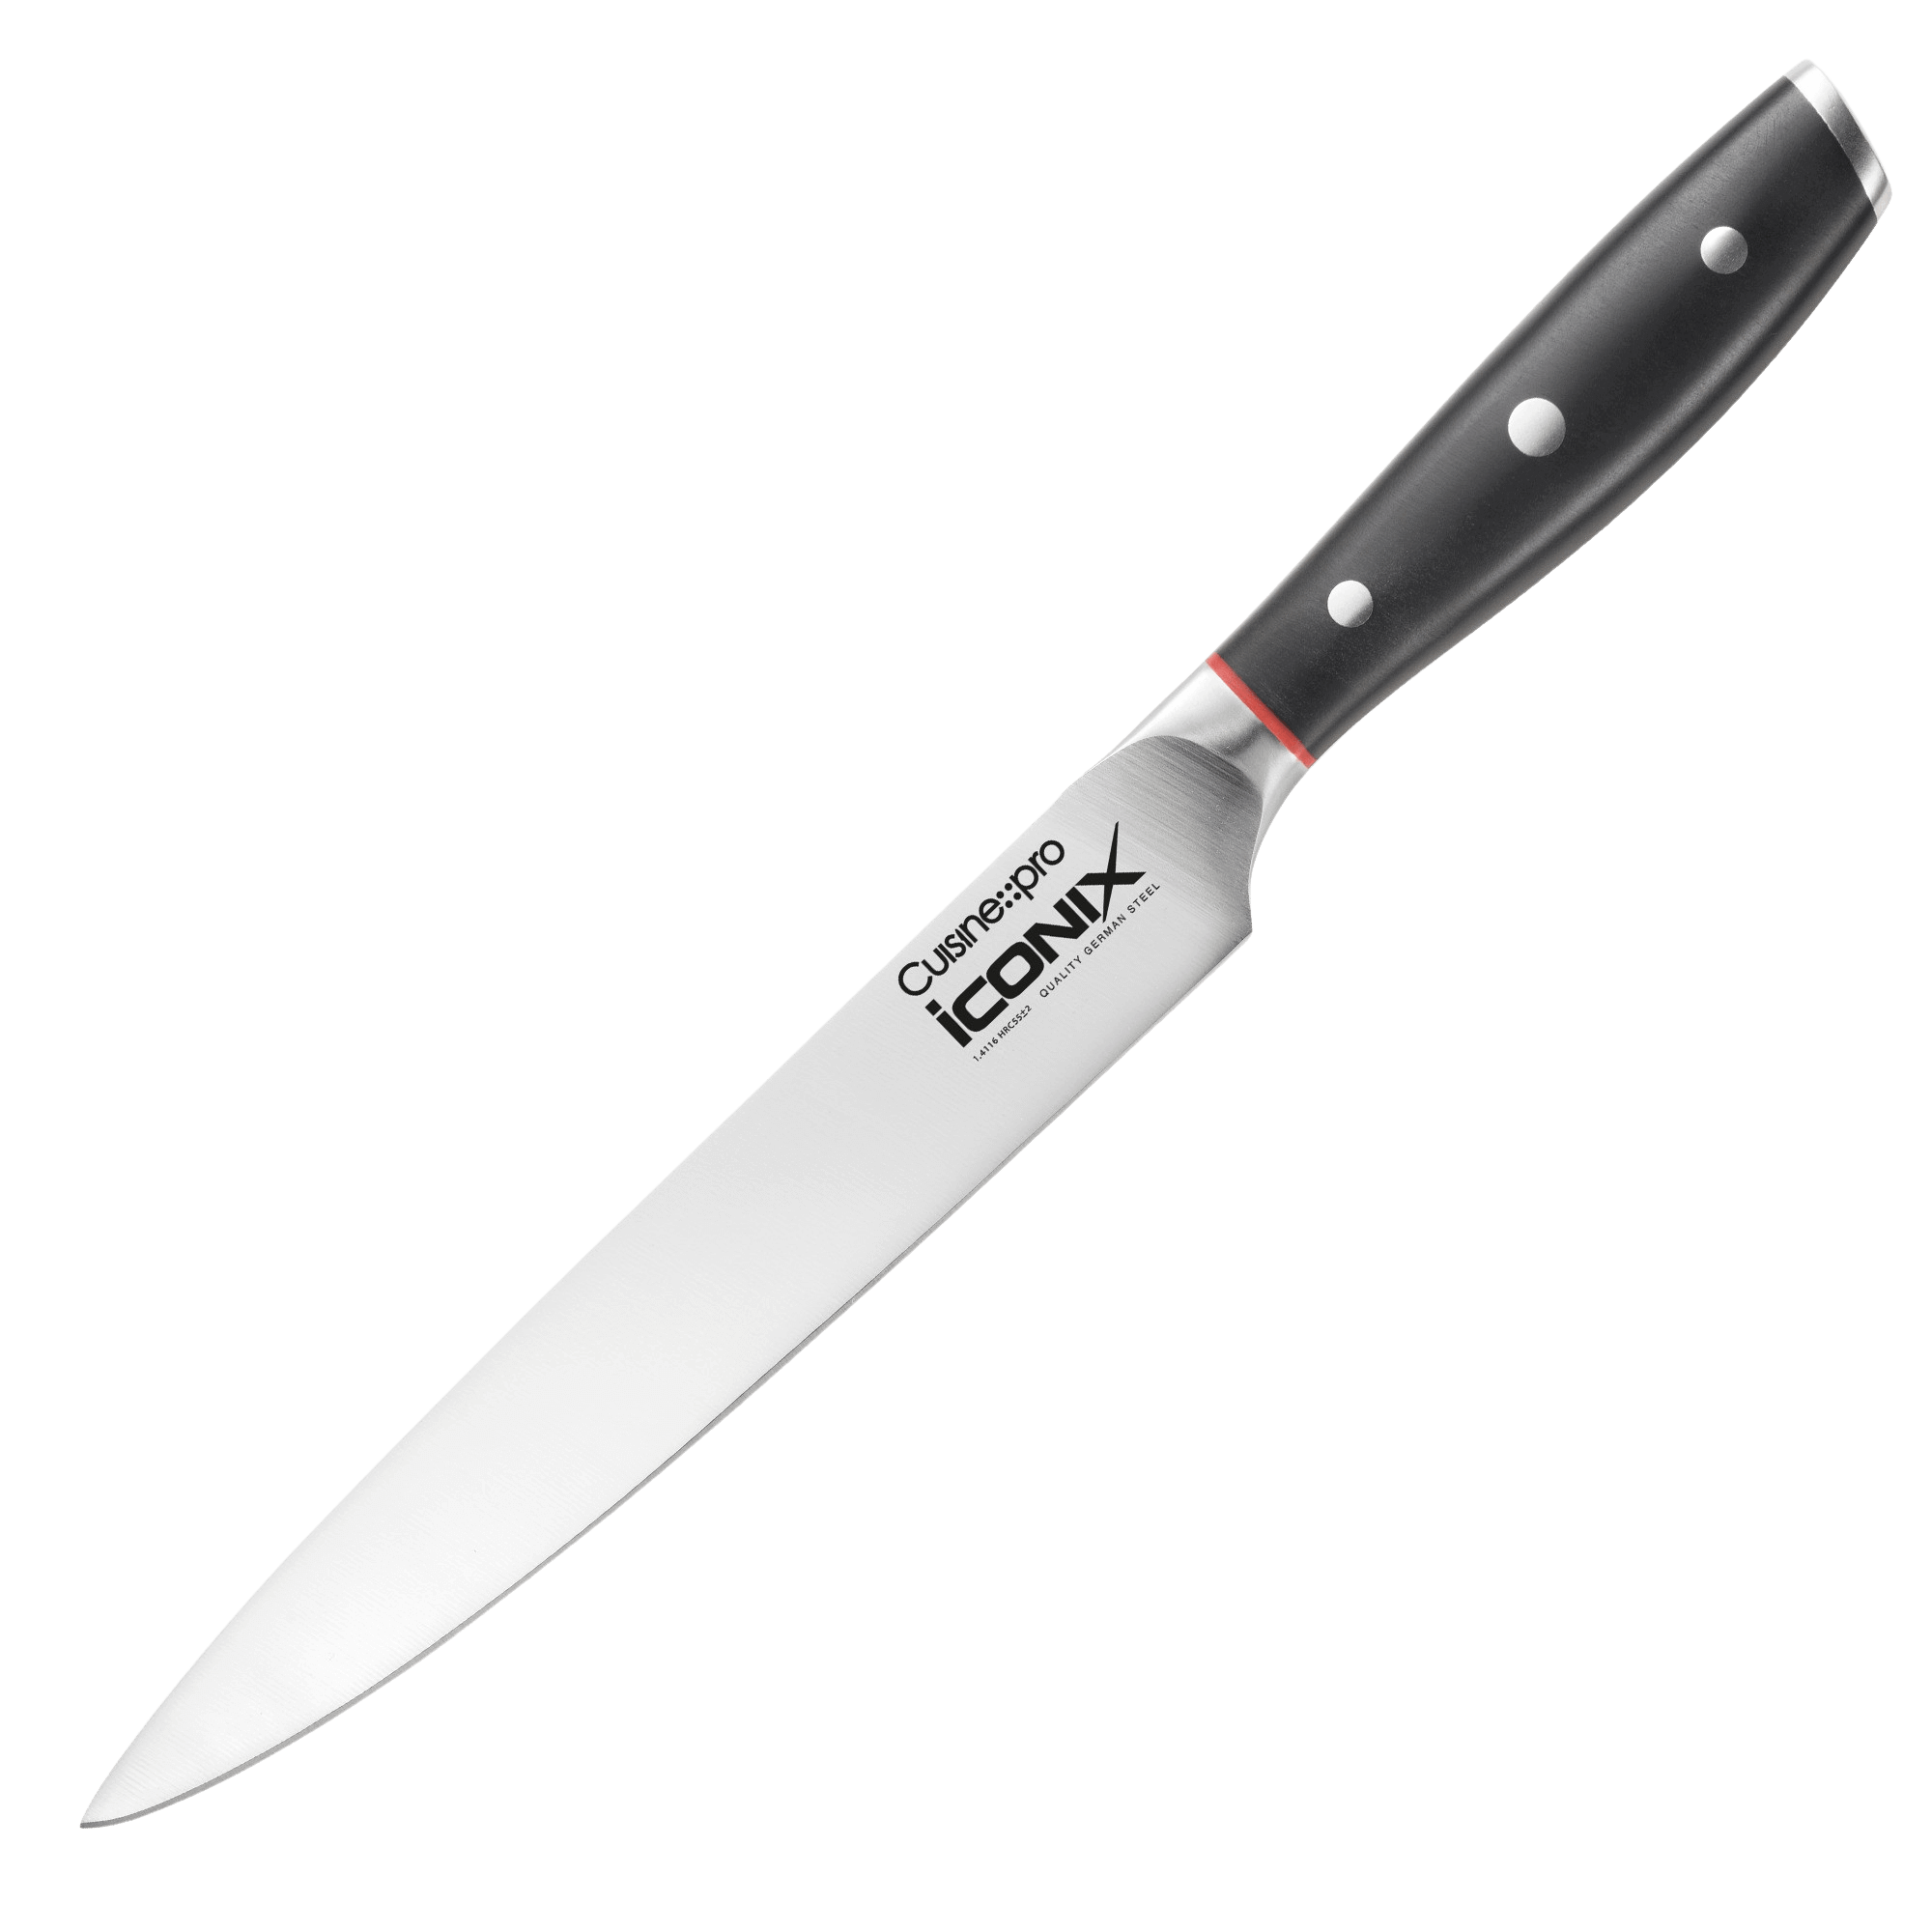 Cuisine::pro® iconiX® Carving Knife 20cm 8"-1034411